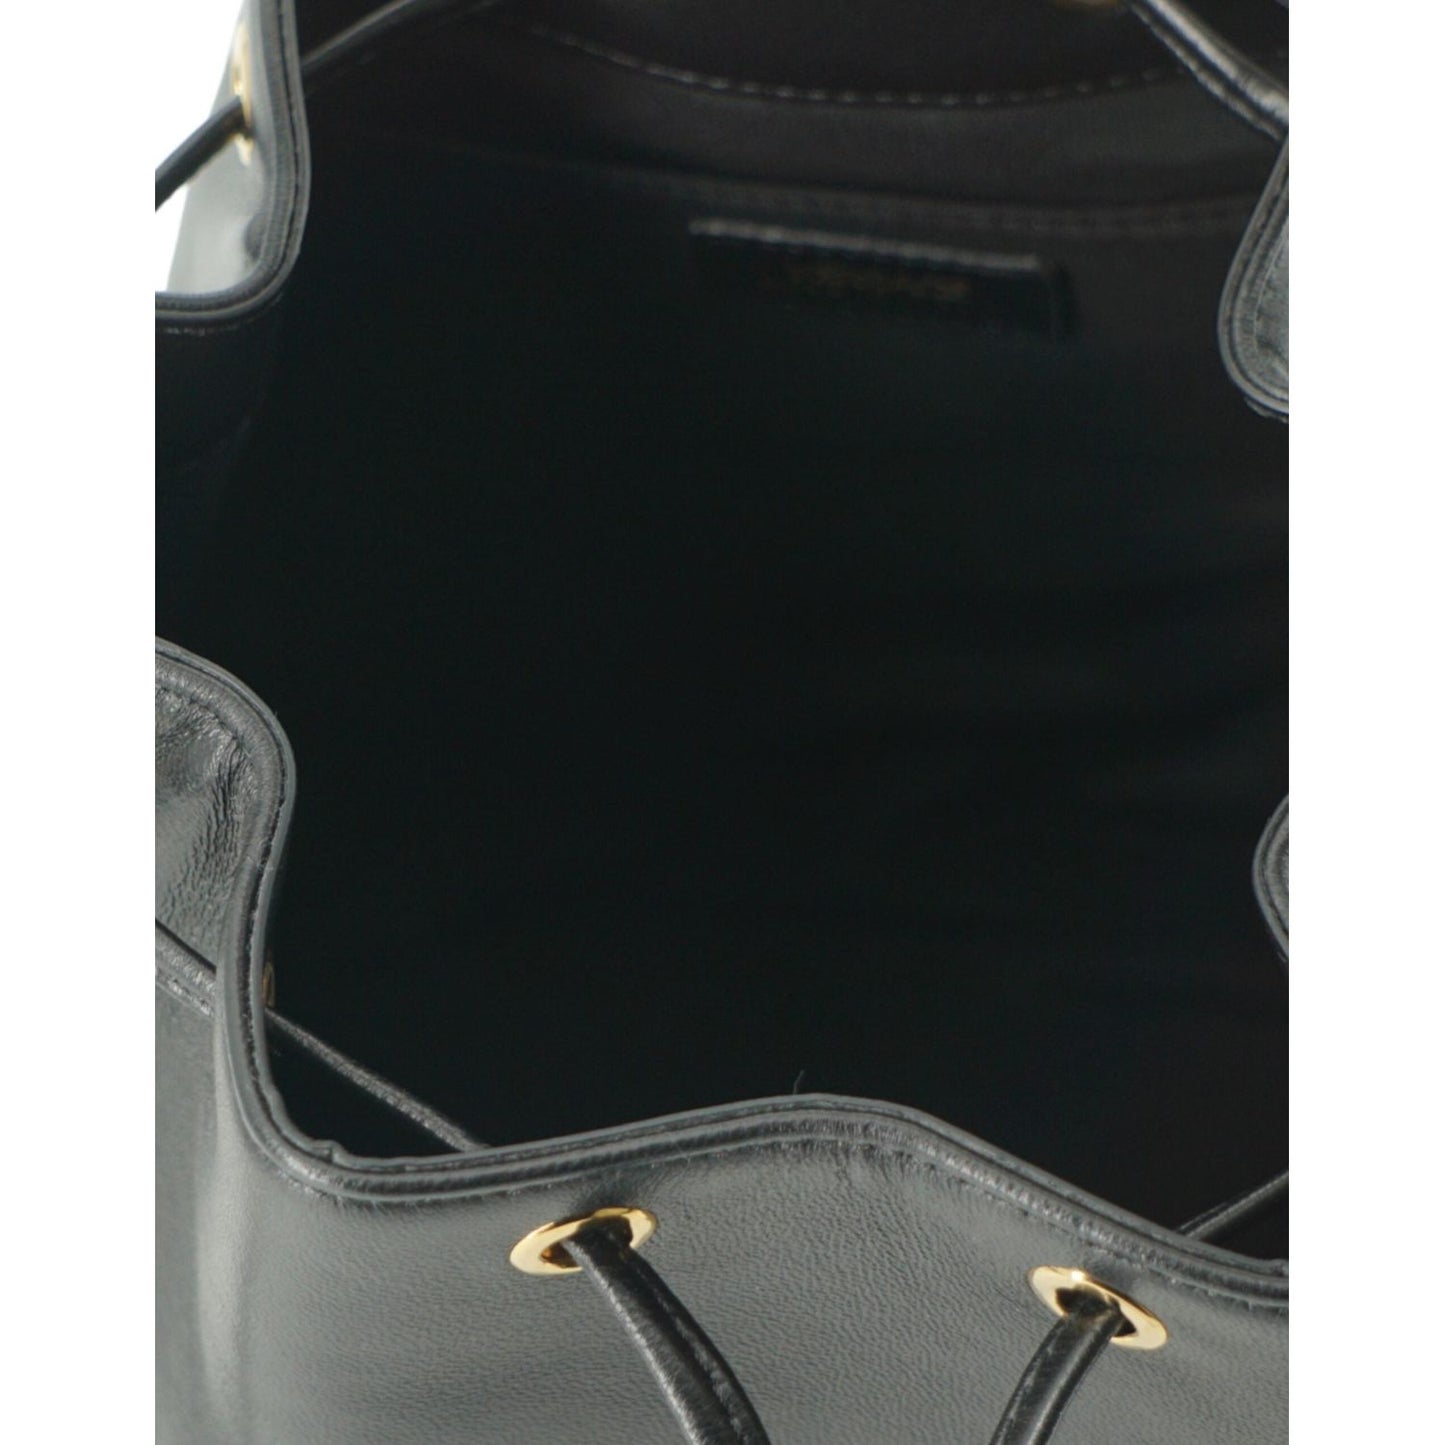 Versace Black Lamb Leather Bucket Shoulder Bag black-lamb-leather-bucket-shoulder-bag DSC01127-scaled-8709986a-bff.jpg